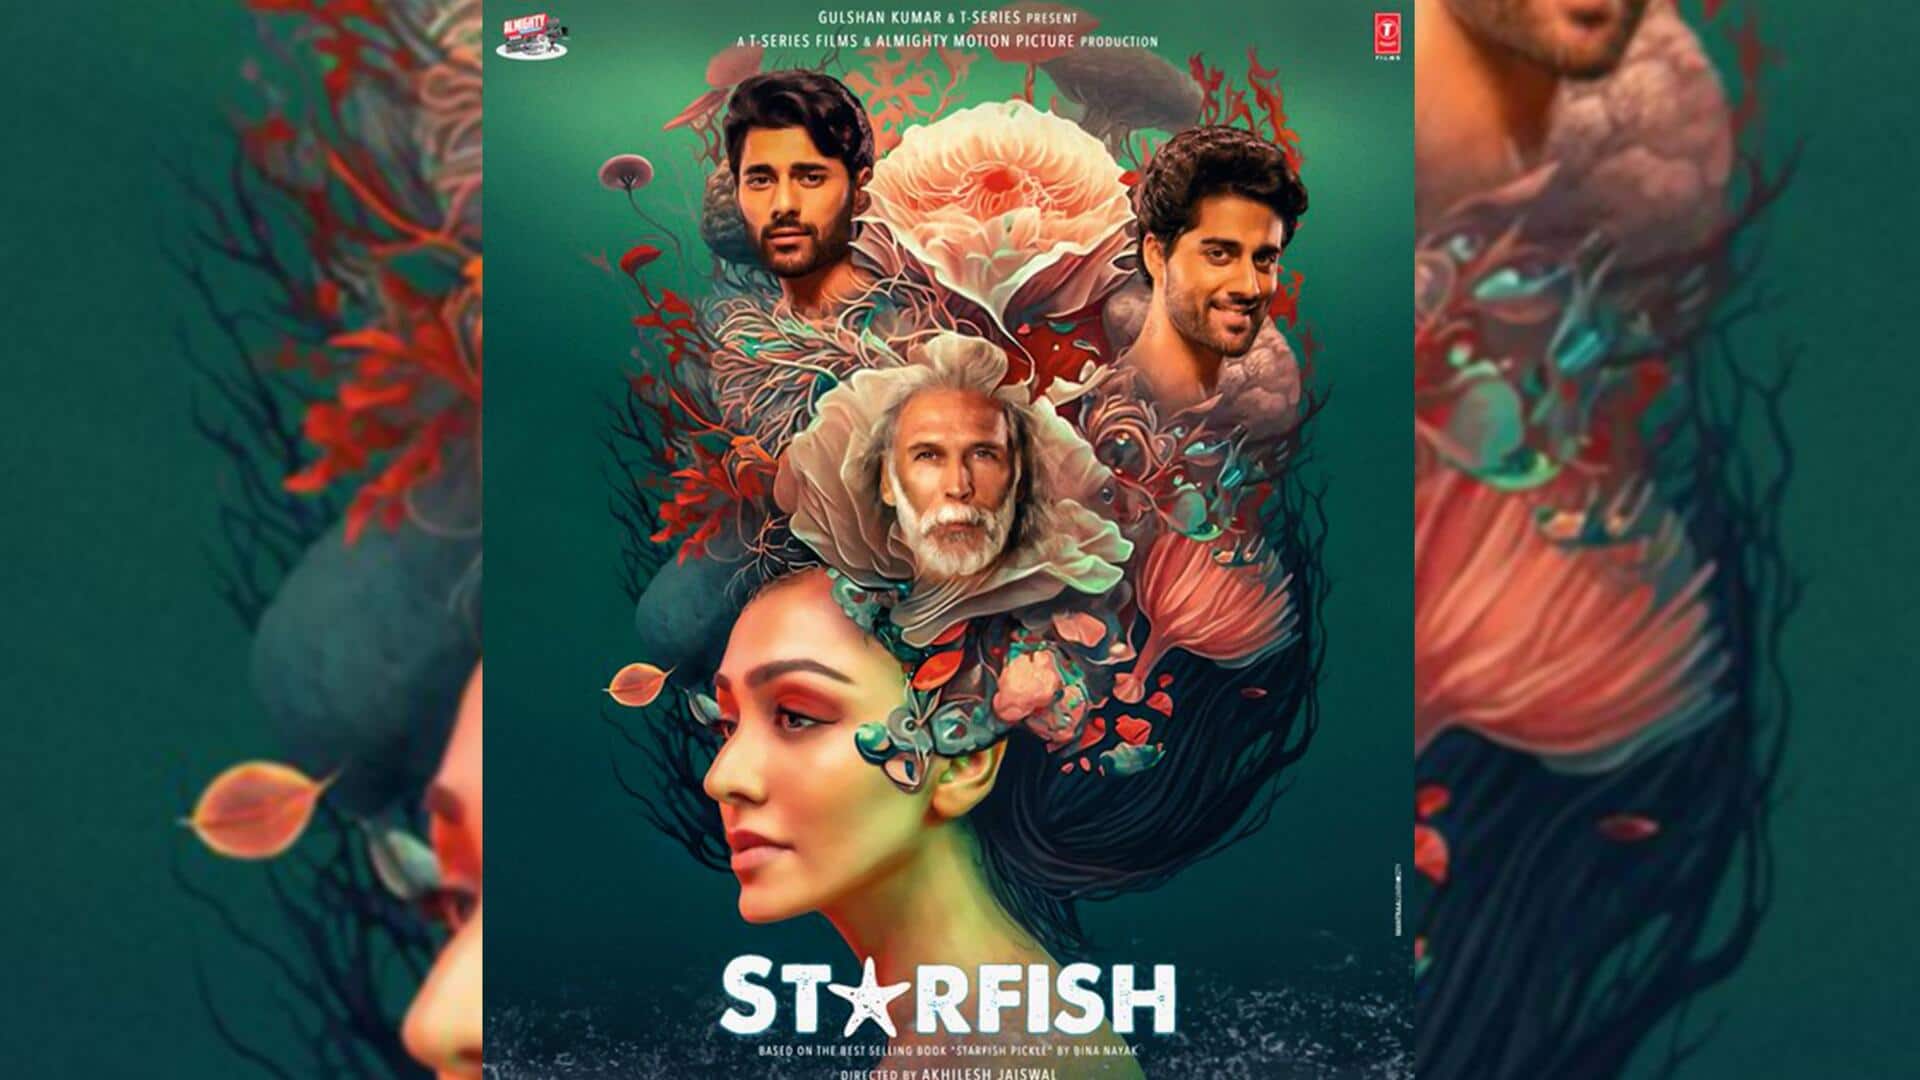 Milind Soman, Khushalii Kumar look enigmatic in 'Starfish' poster